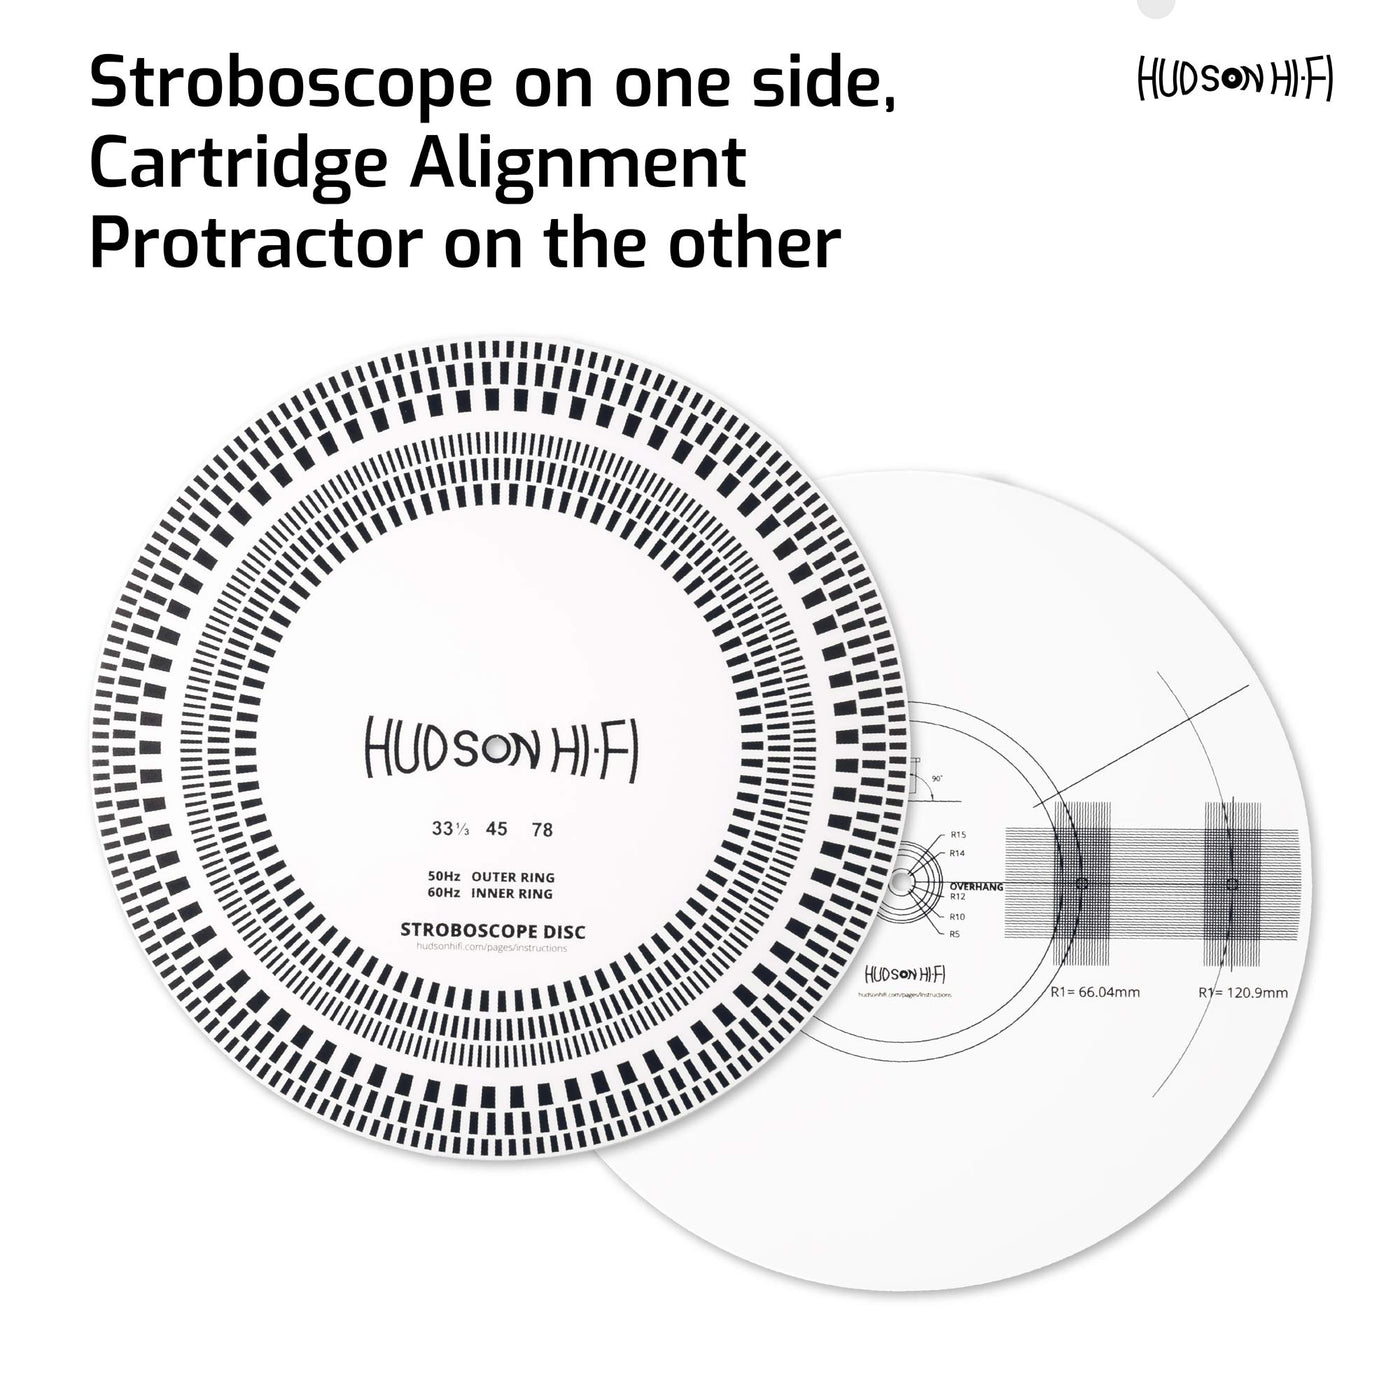 Hudson Hi-Fi Stroboscope and Protractor Mat